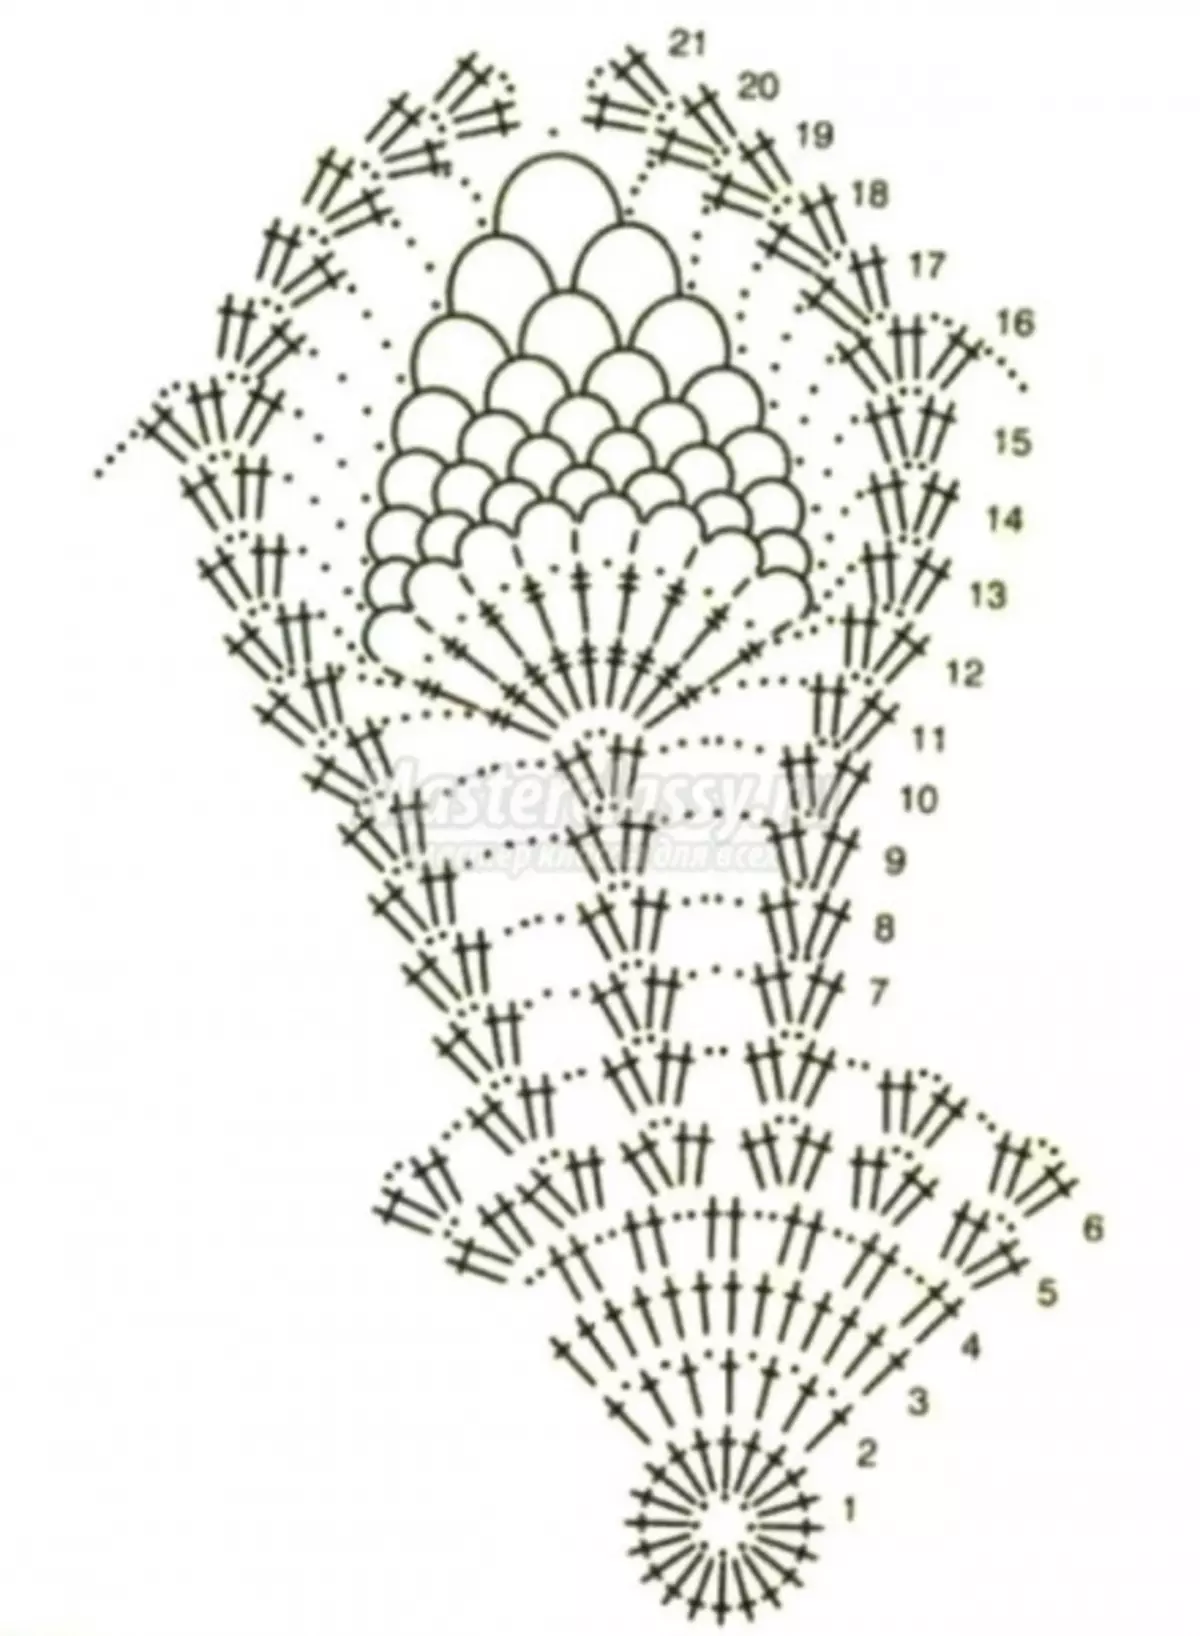 Sunflower Napkin Crochet: Scheme And Description with Video